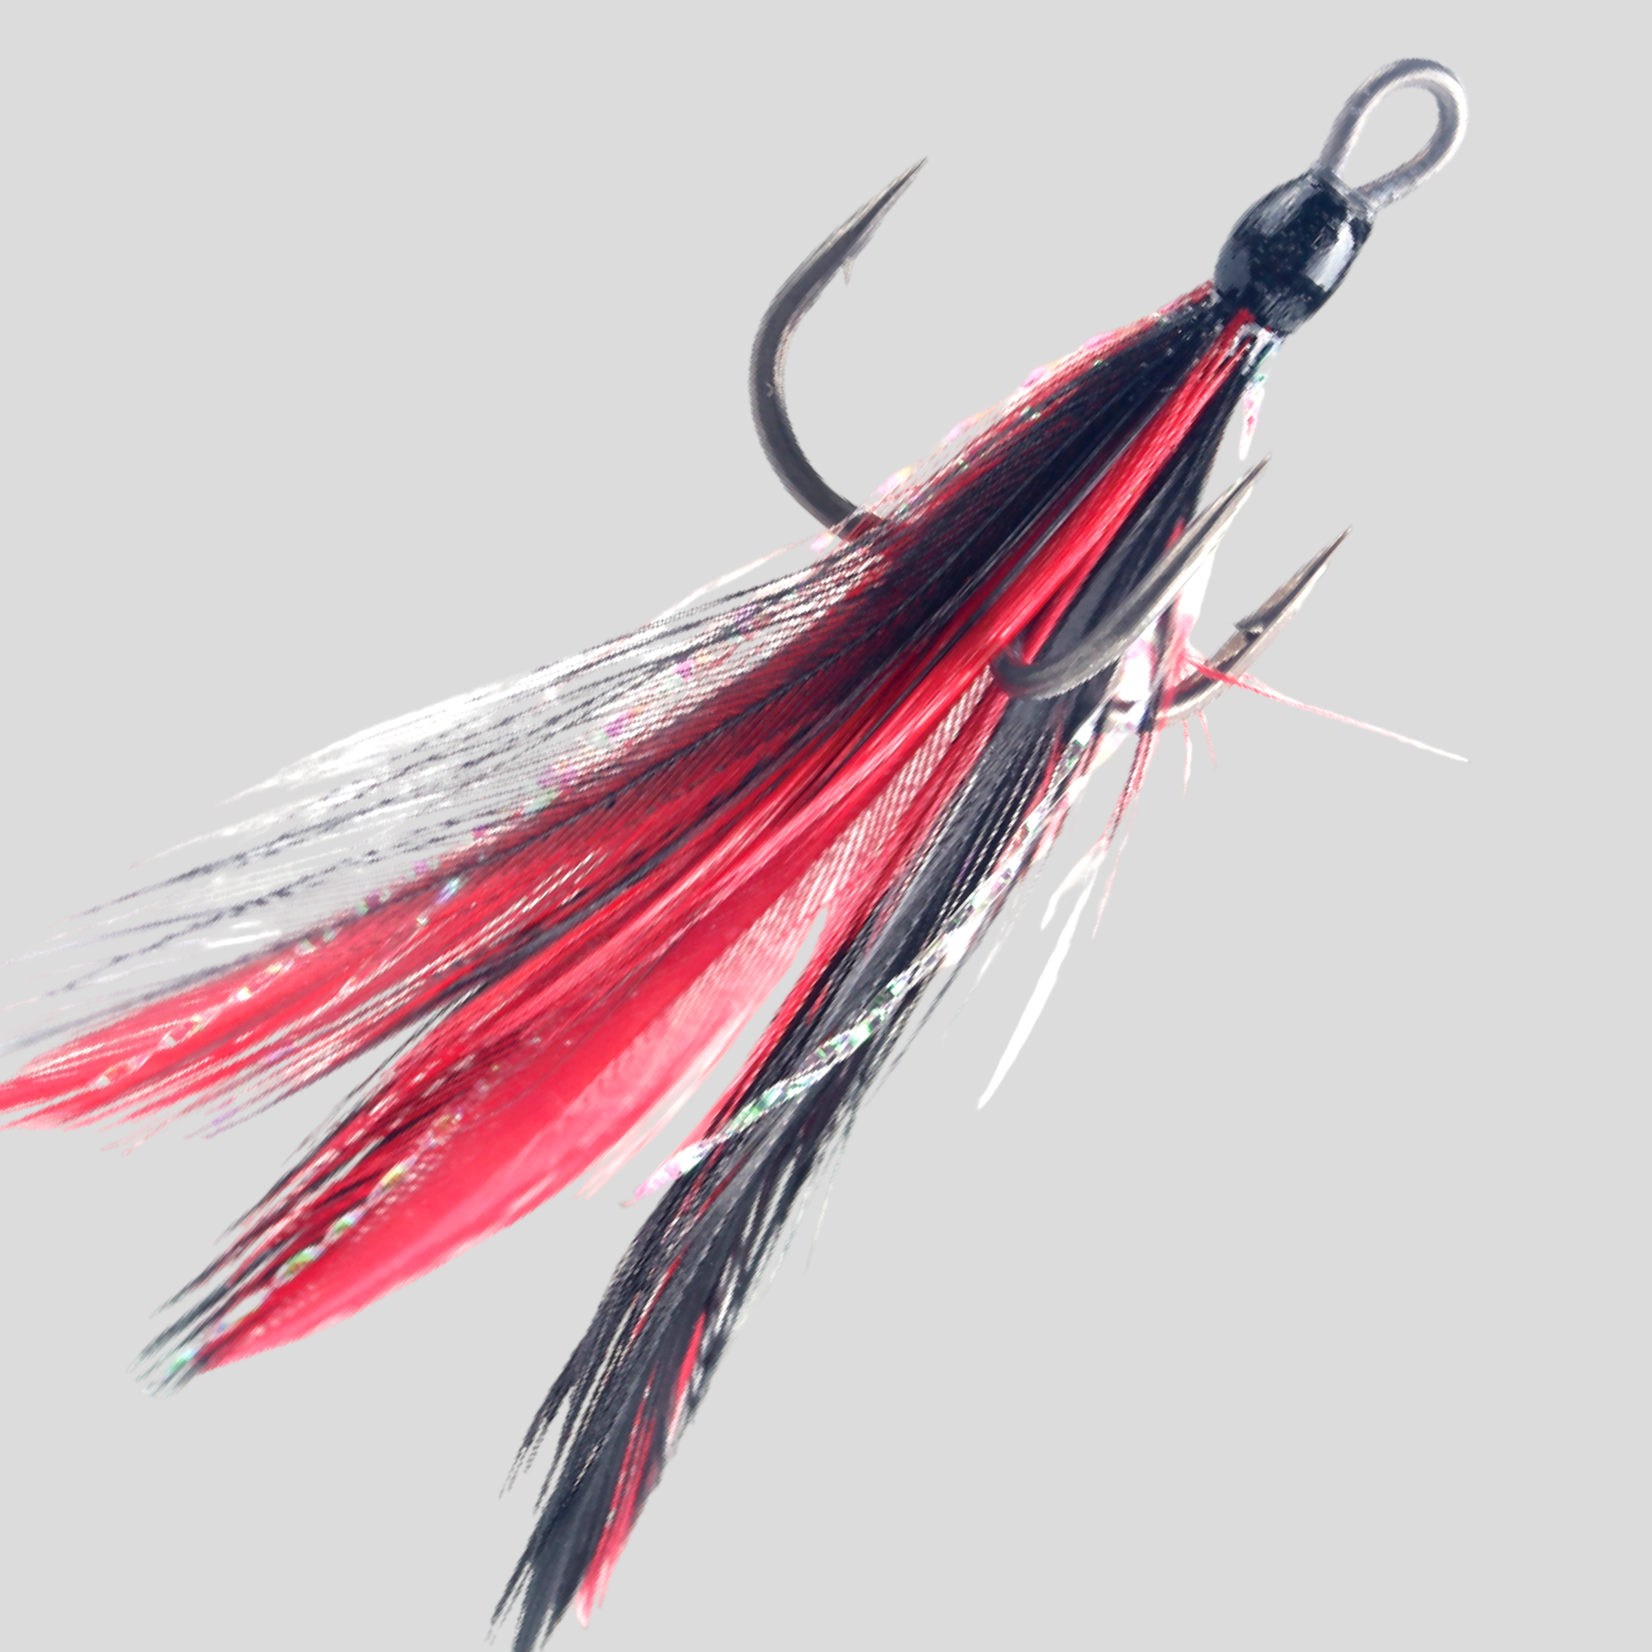 BKK Feathered Spear-21 SS Treble Hooks - Black/Red - #6